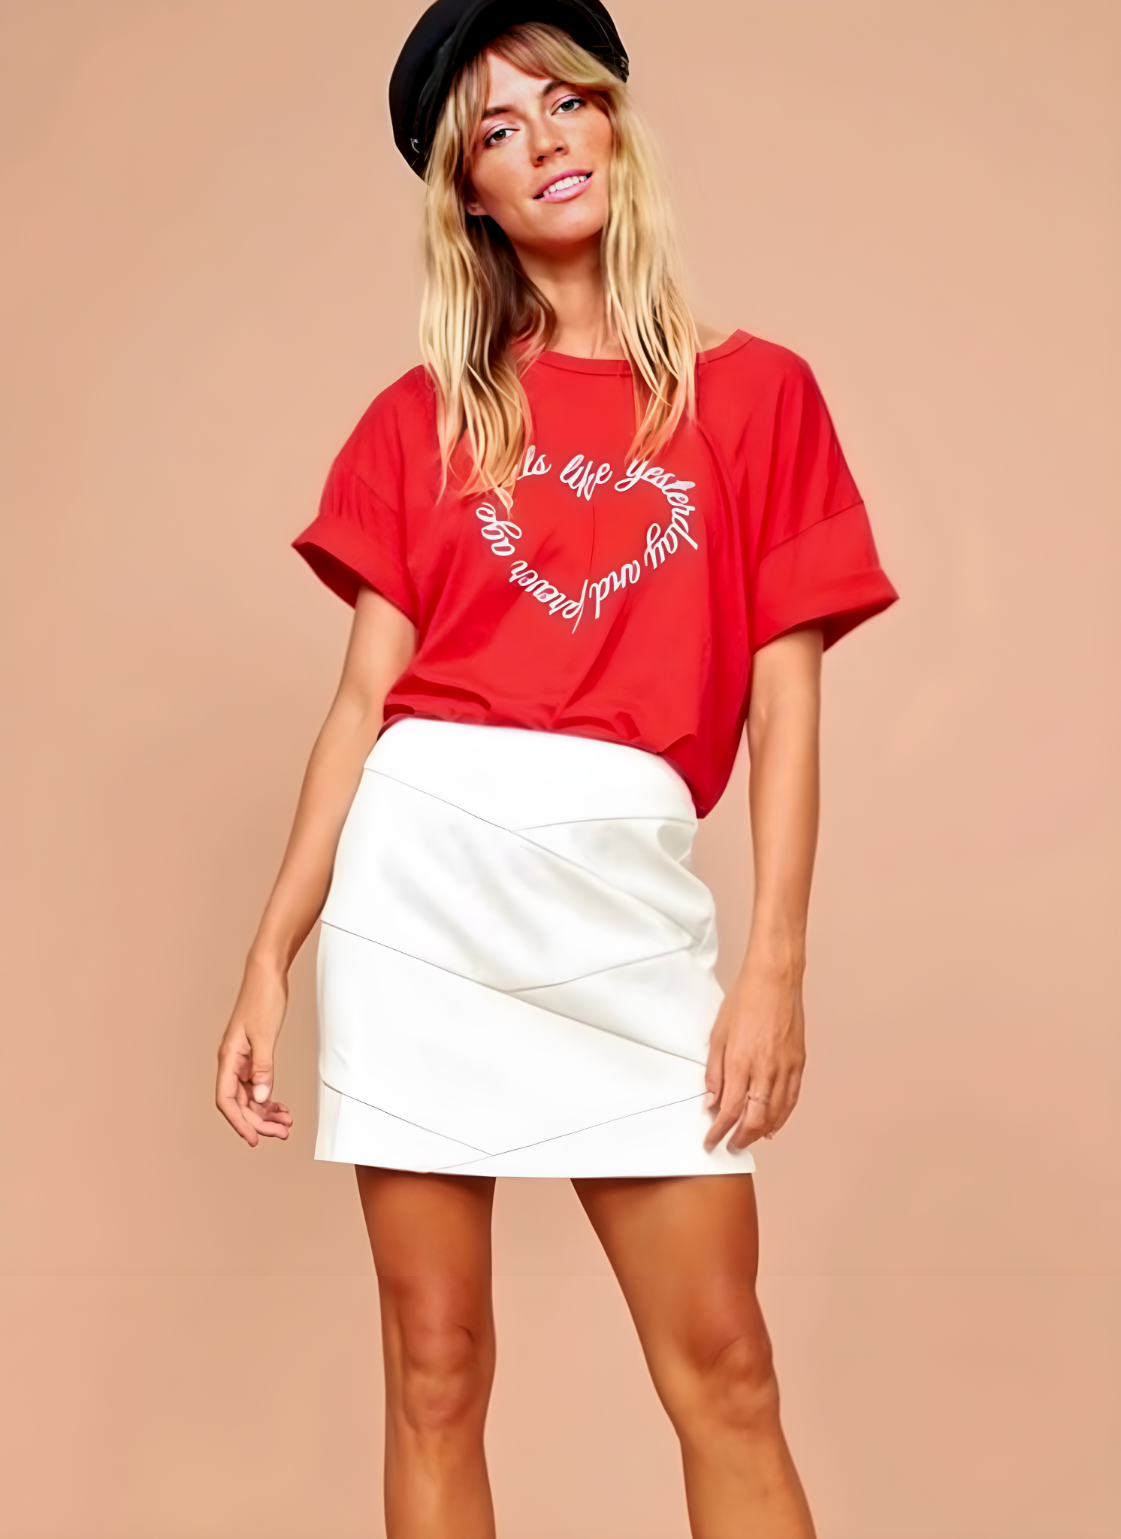 Plus Size Summer Denim Skirt Outfit - Alexa Webb